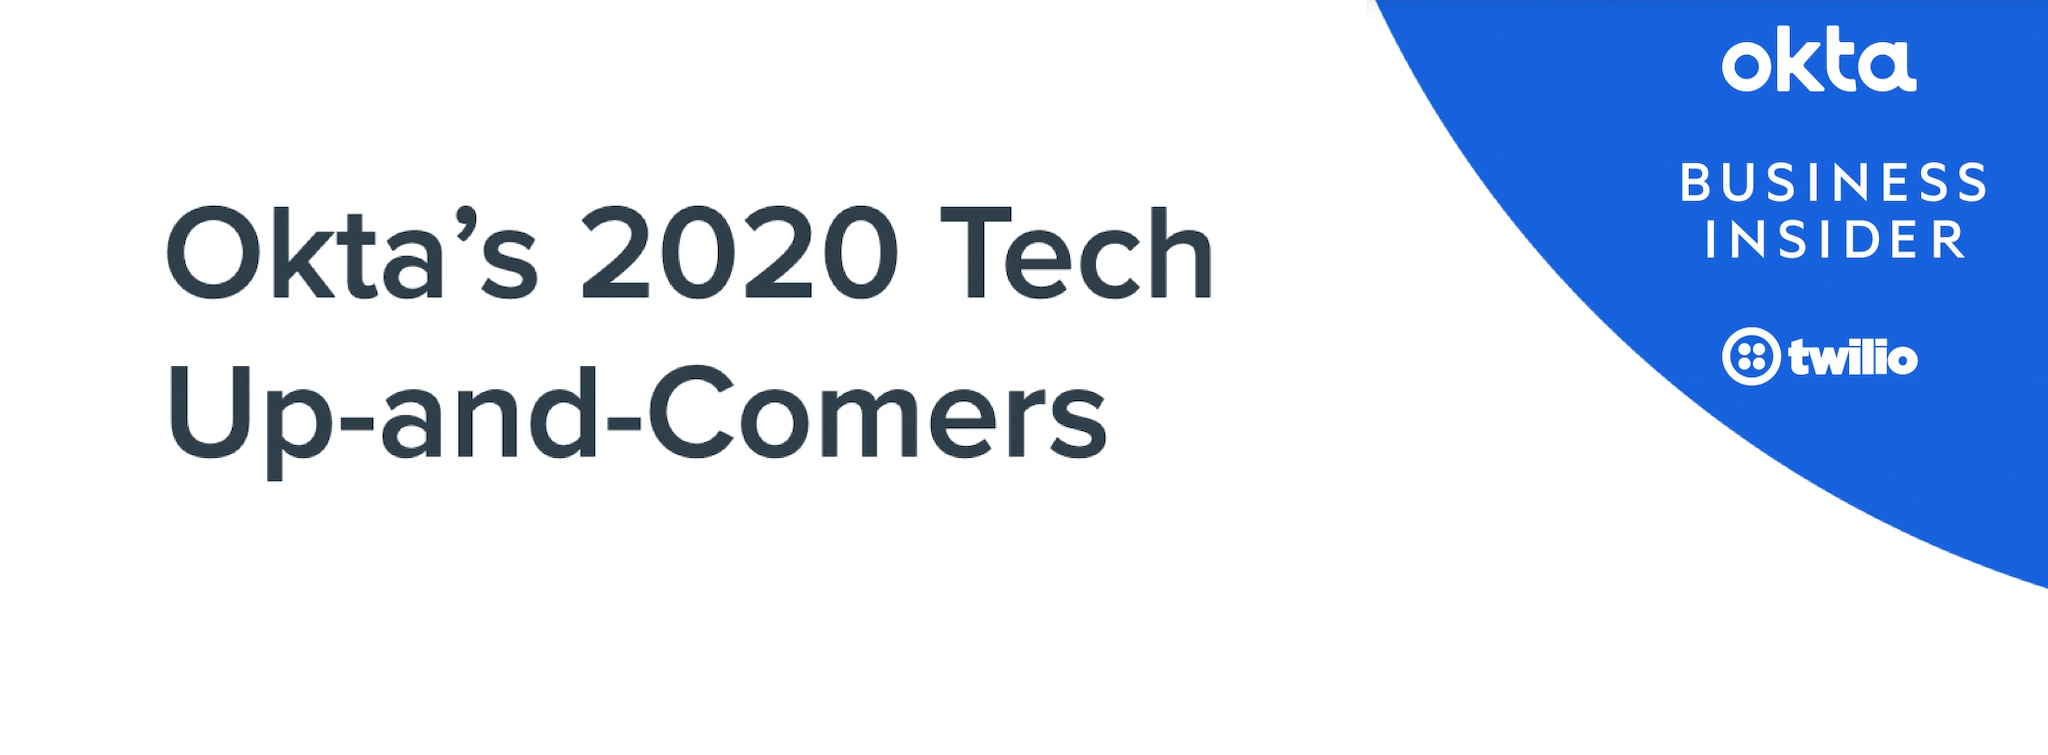 Tech Up-and-Comers Okta 2020